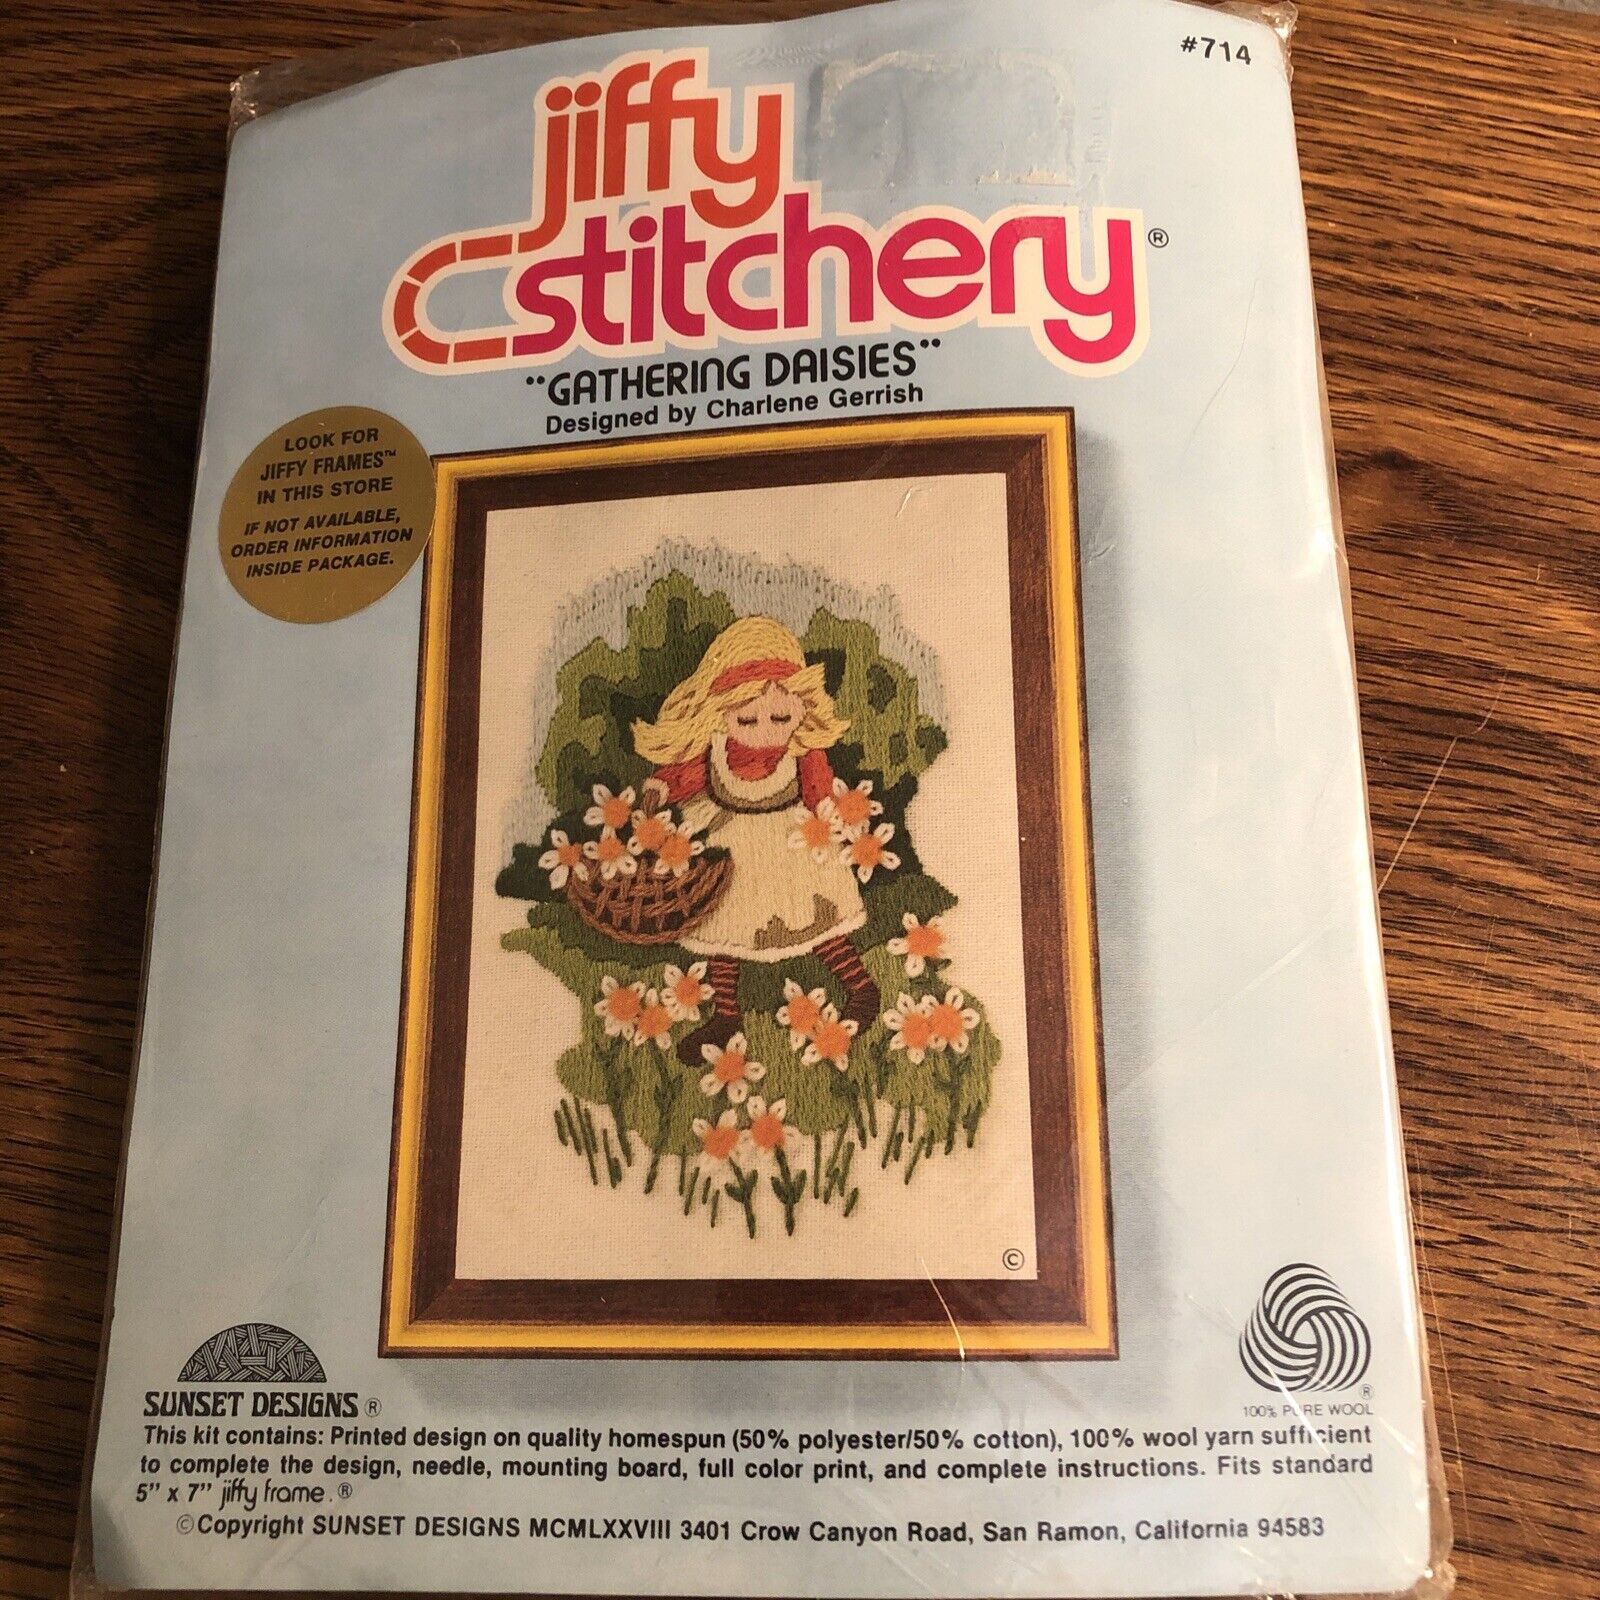 NEW NOS NIP Vintage Jiffy Stitchery Kit Gathering Daisies  #714 Charlene Gerrish